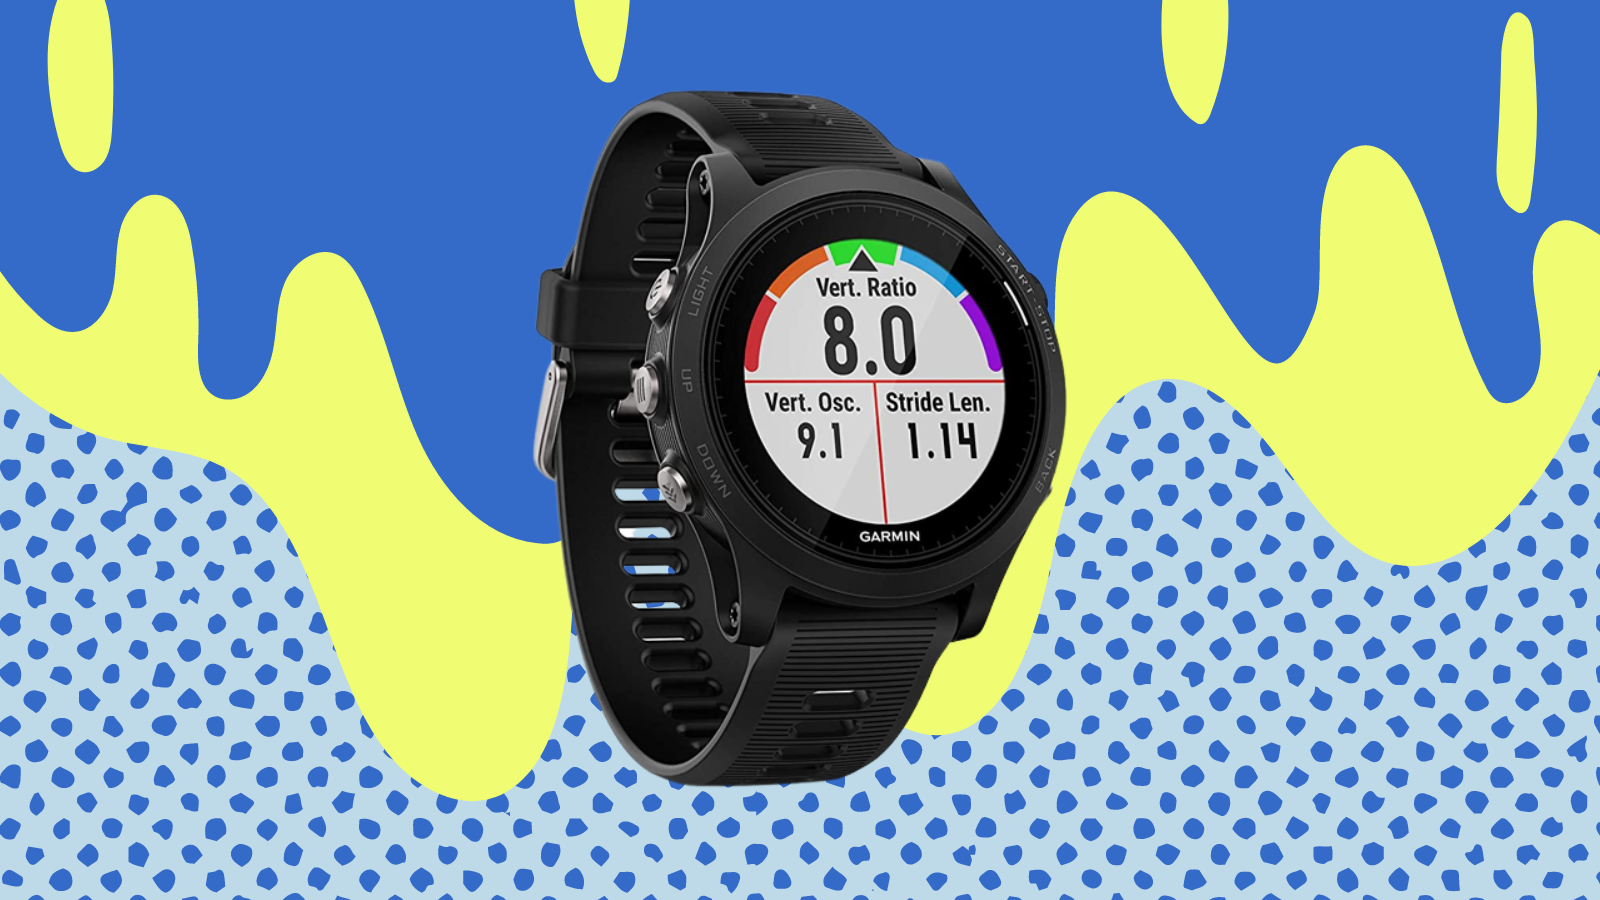 Save $270 on the Garmin Forerunner 935, a smartwatch built for runners